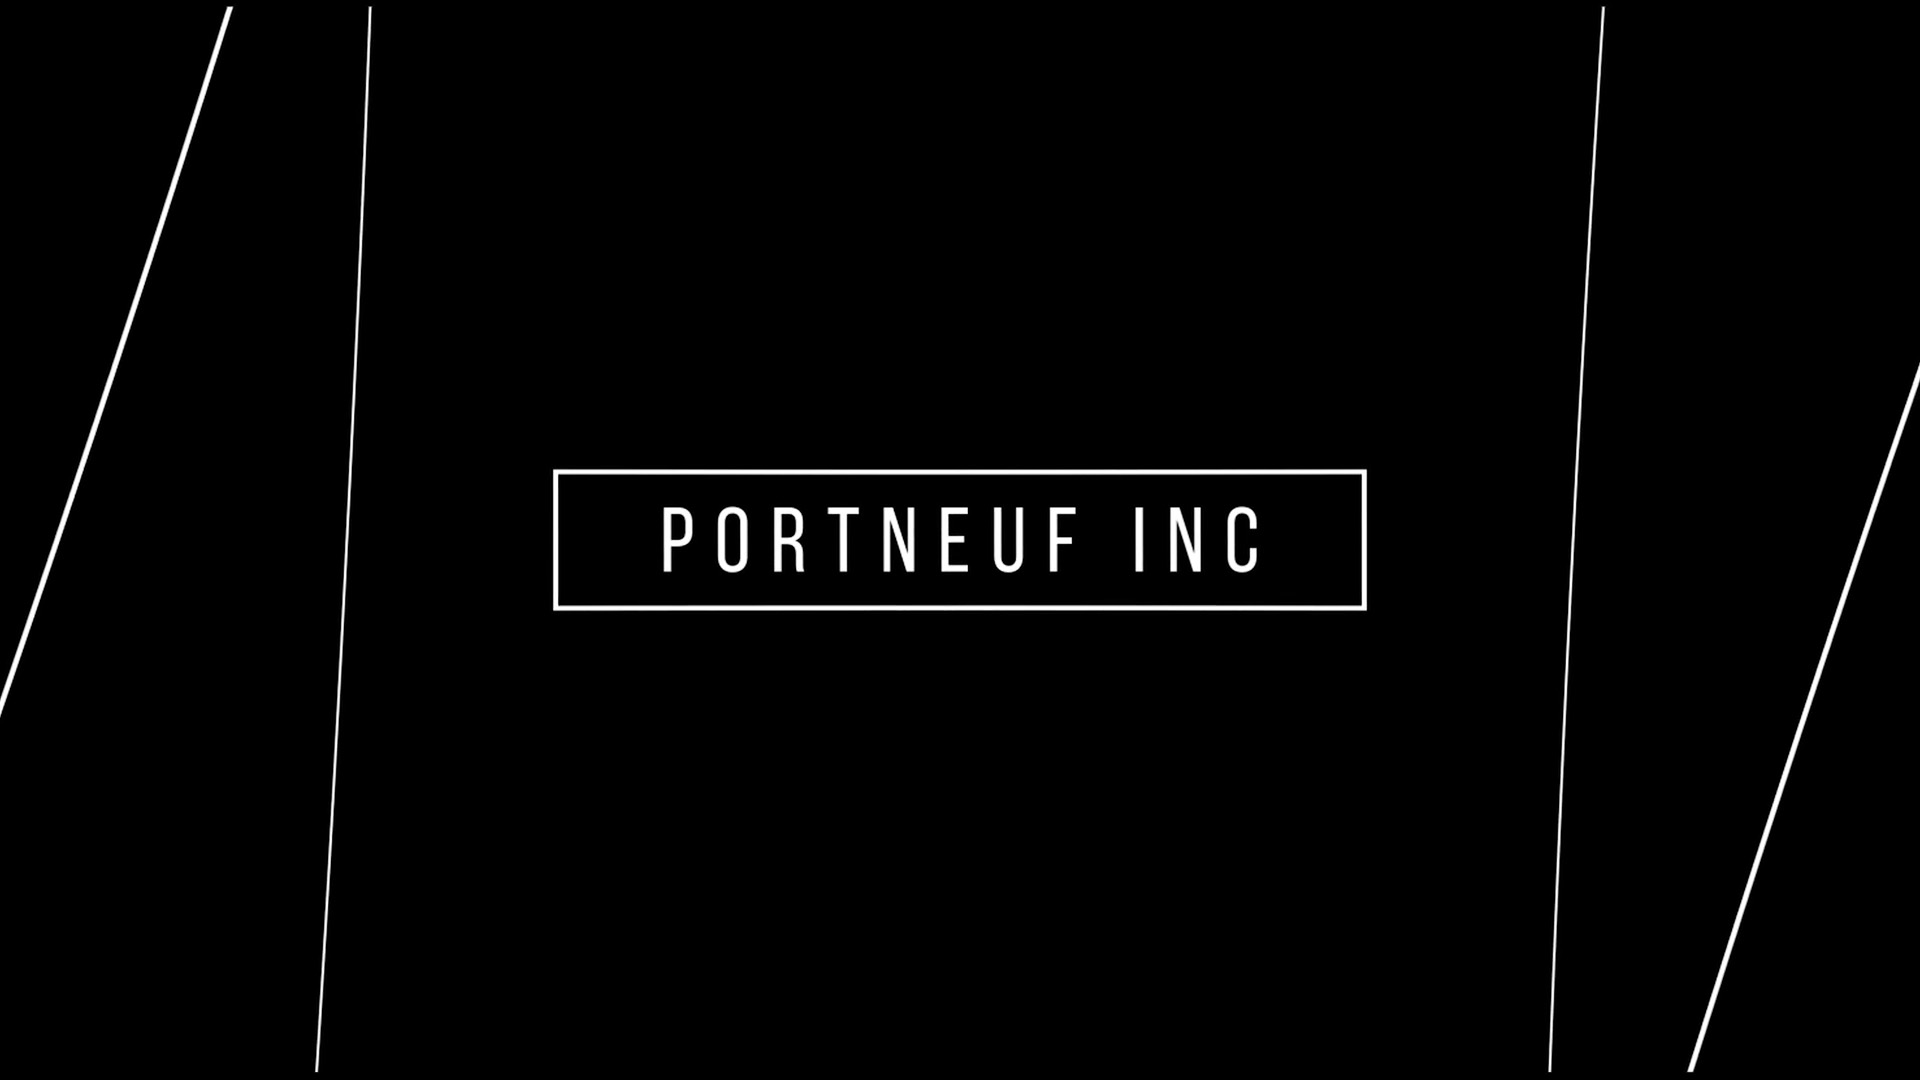 Portneuf Inc